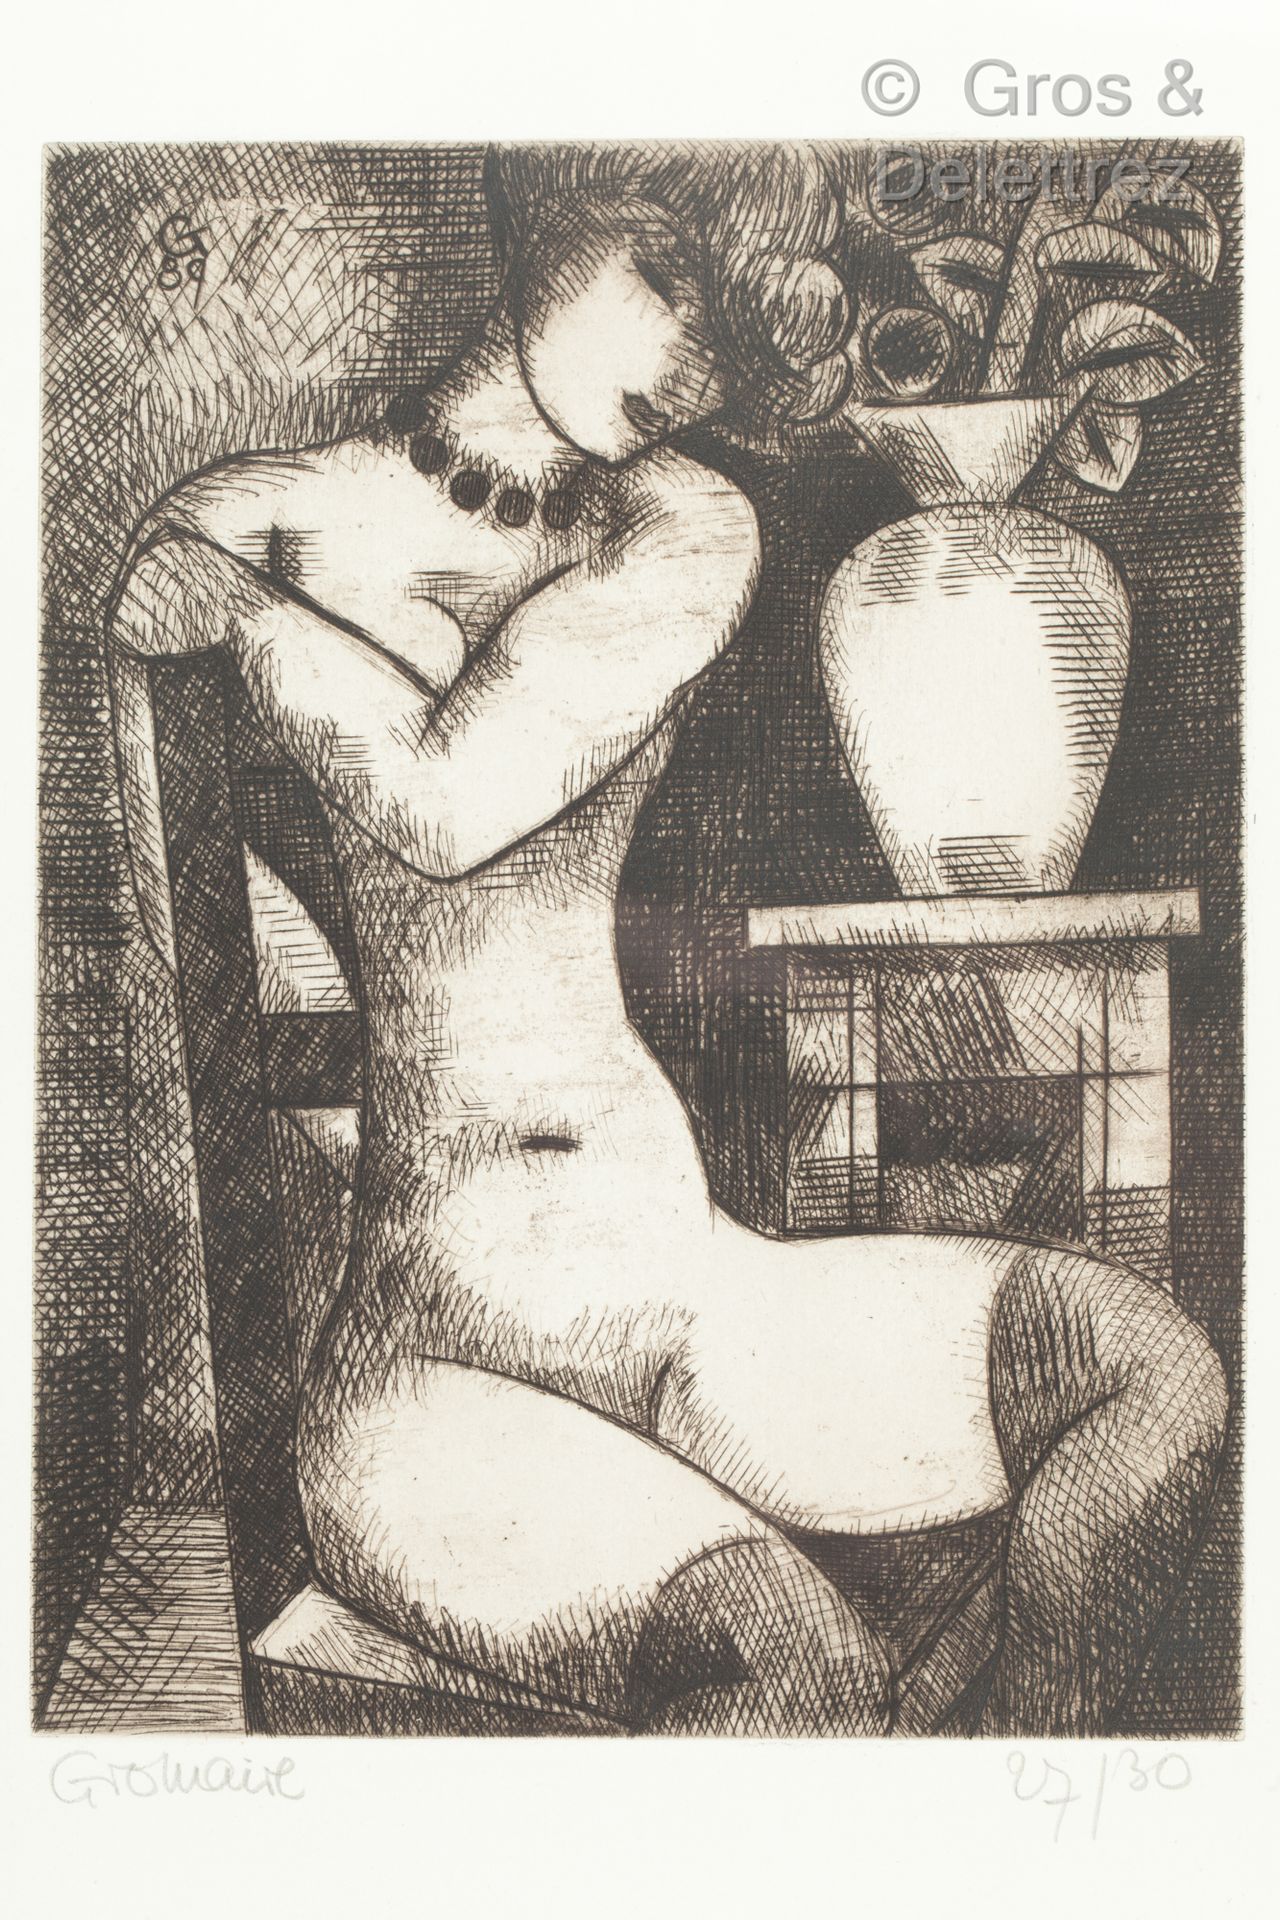 Marcel GROMAIRE (1892 - 1971) 带花瓶的裸体。1930

已签名的蚀刻版画，编号为27/30。

小小的狐臭。

(F.Gromai&hellip;